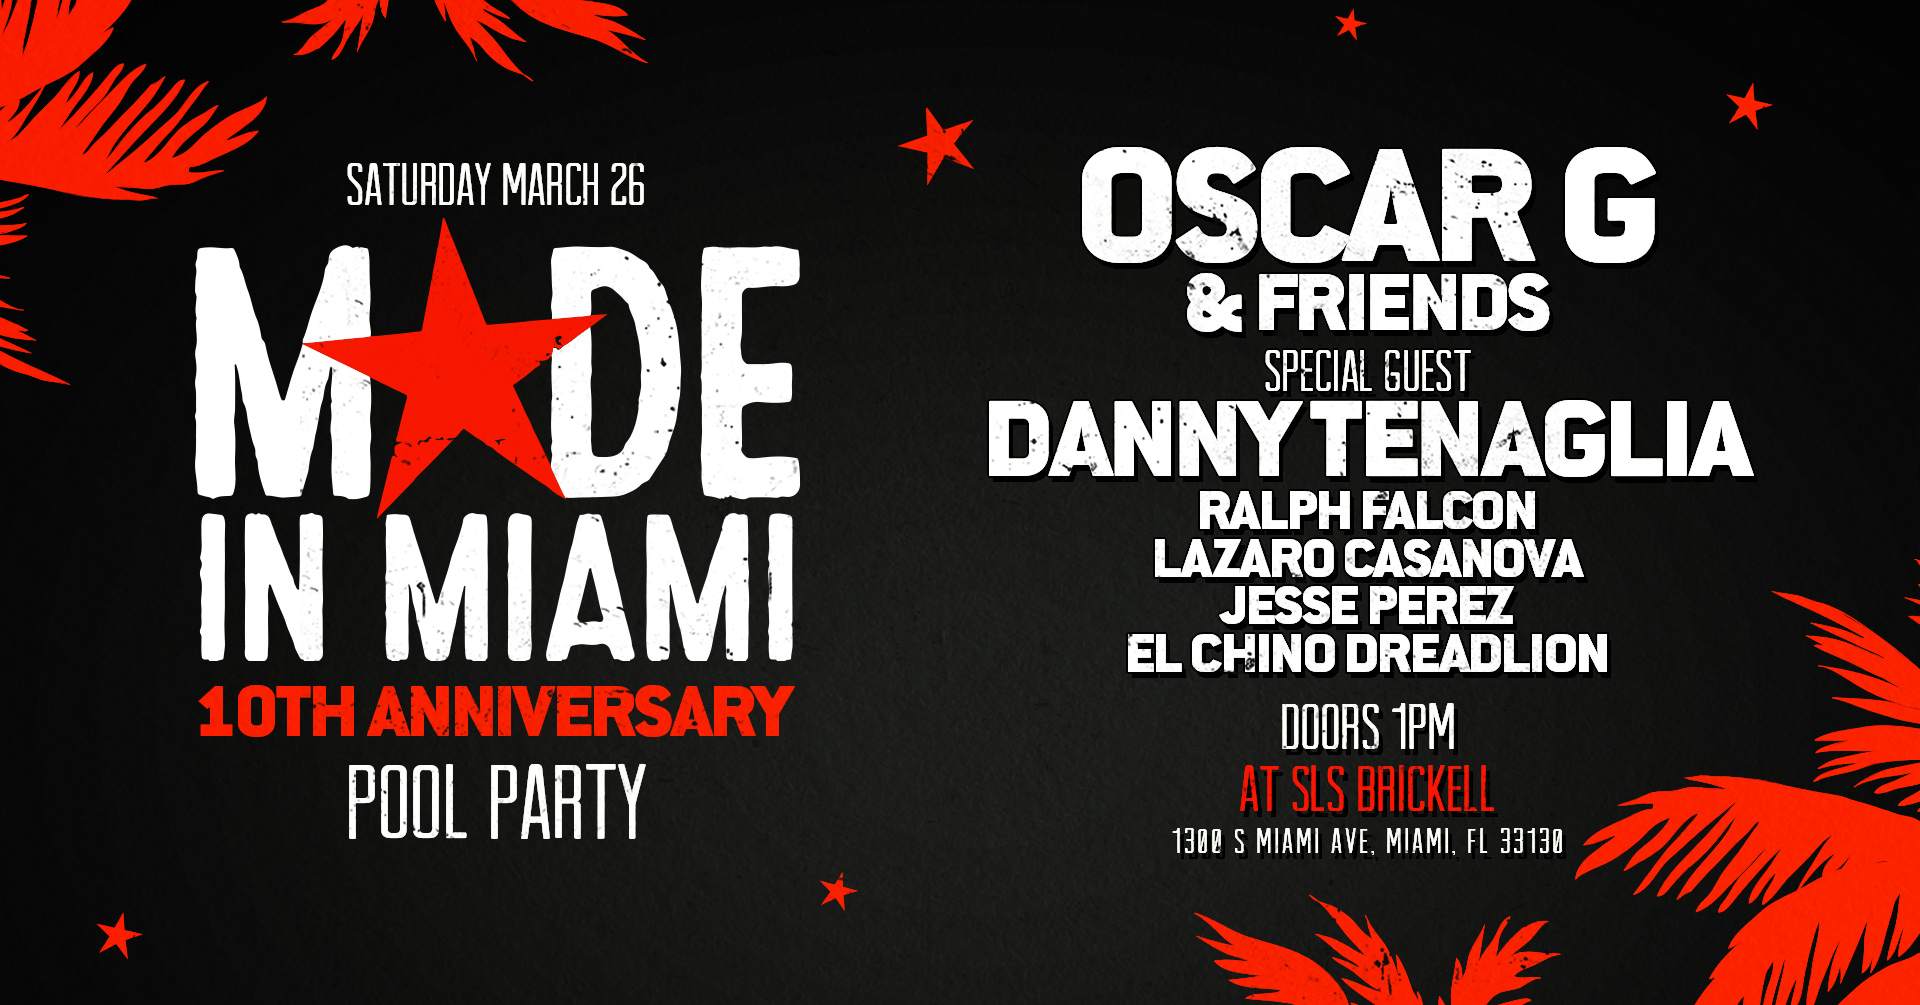 Oscar G & Special Guest Danny Tenaglia - Made In Miami 10 Year Anniversary Pool Party - Página frontal